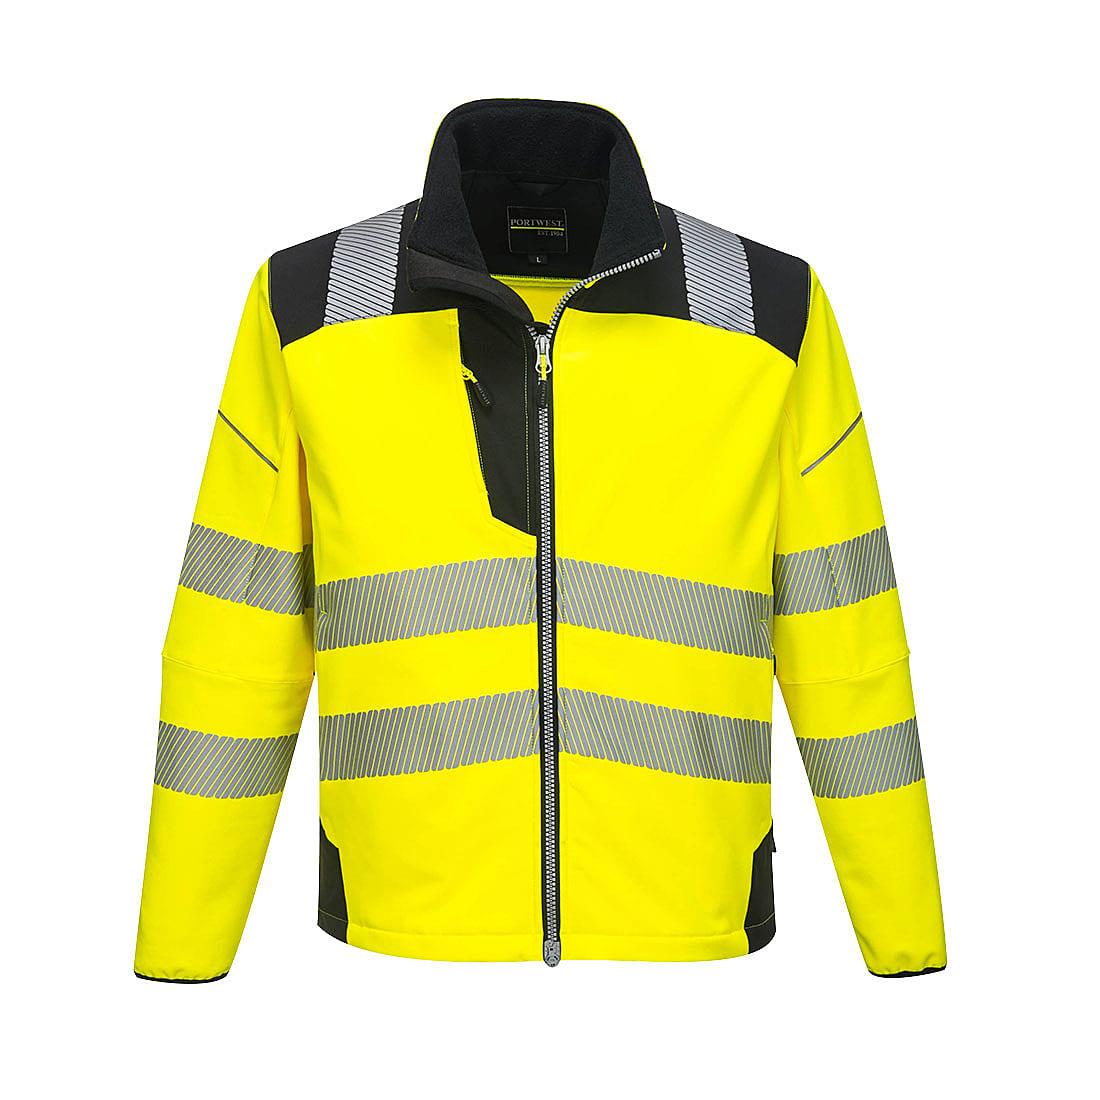 Portwest PW3 Hi-Viz Softshell Jacket in Yellow / Black (Product Code: T402)